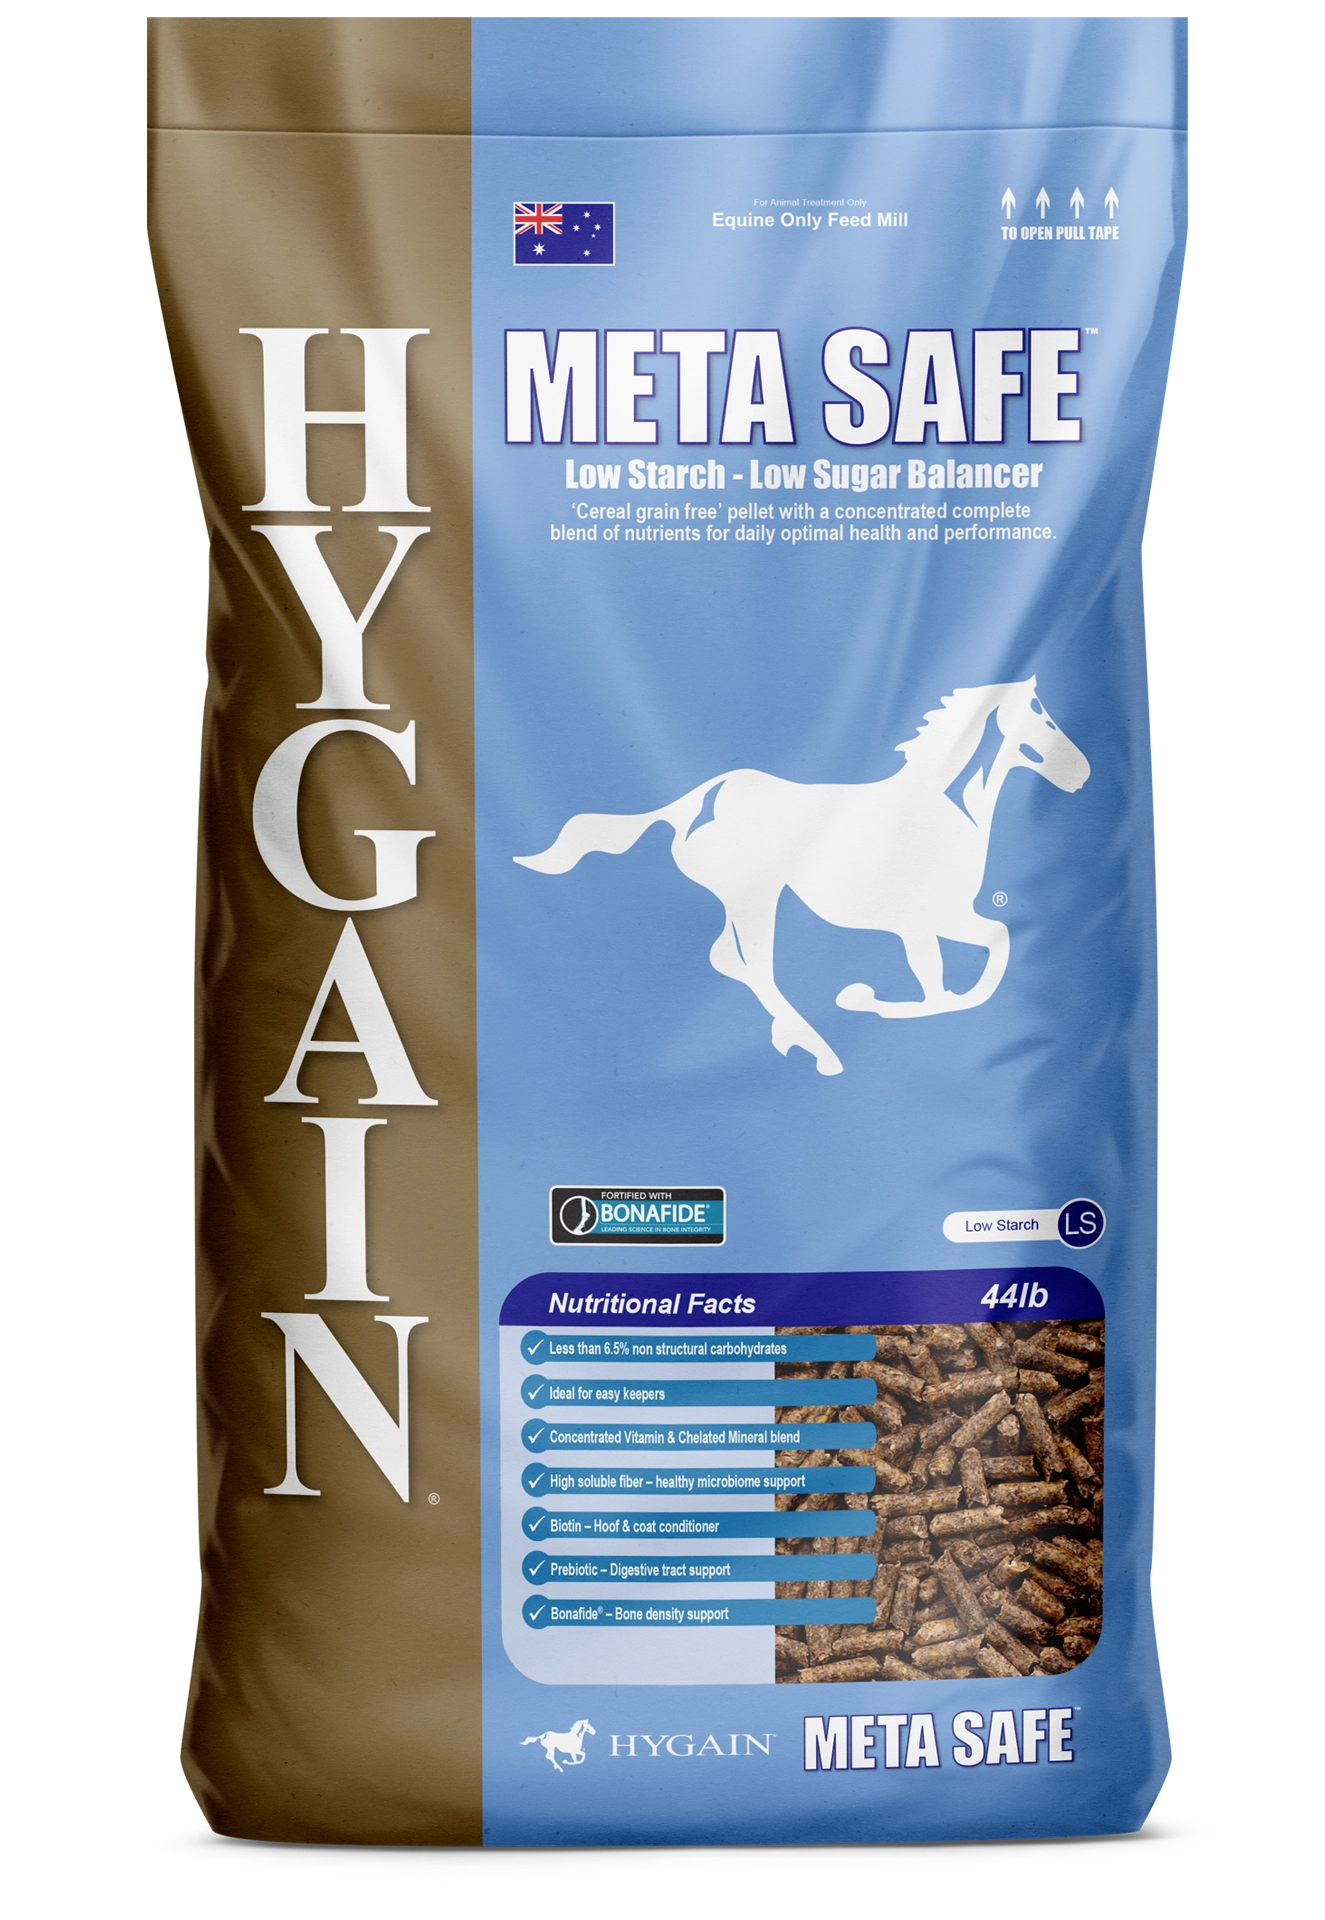 Hygain Meta Safe bag